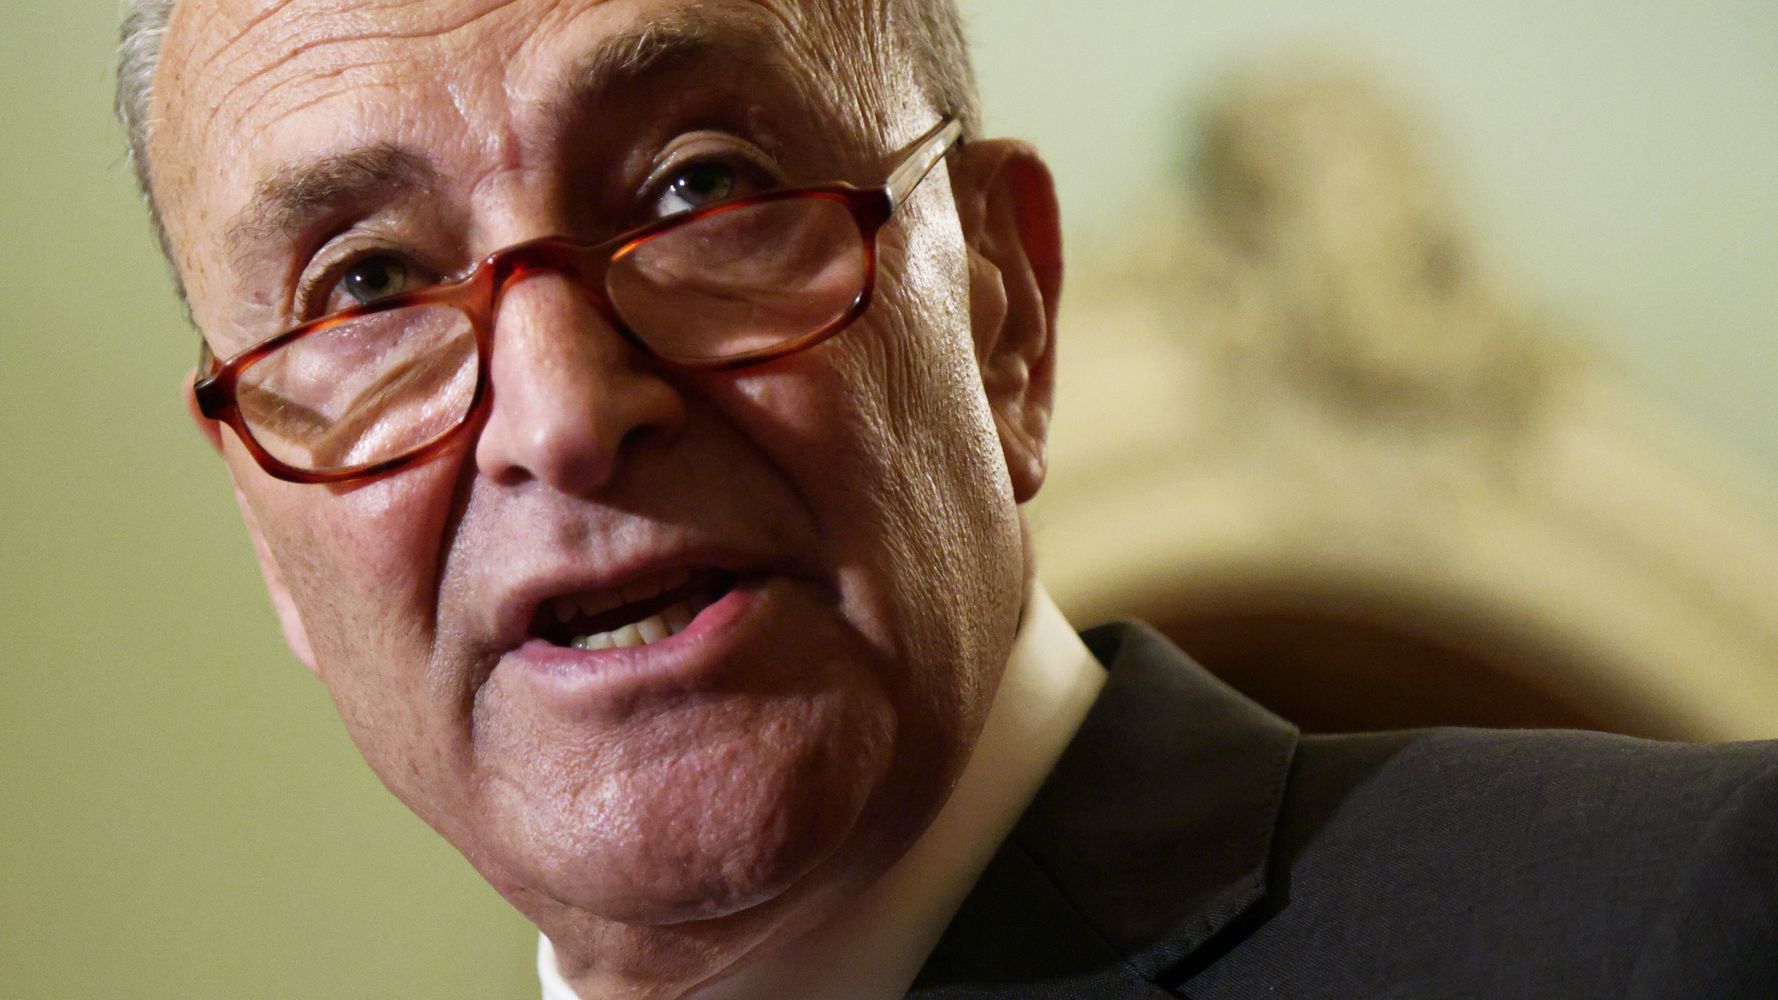 Chuck Schumer Warns He May Need To Cut Senate’s August Recess Short